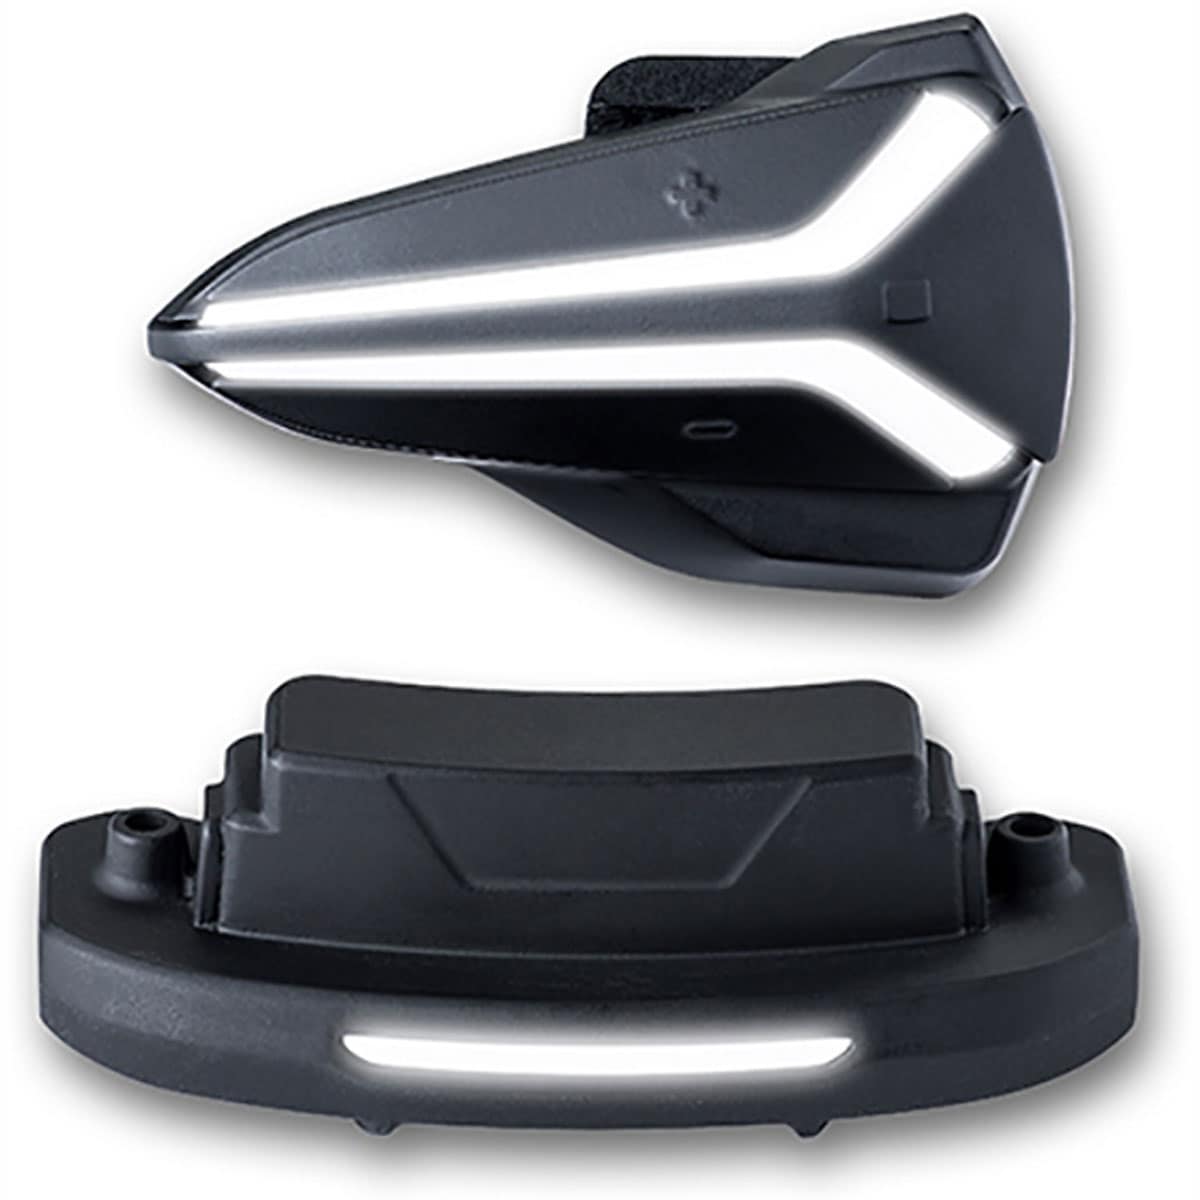 Smart HJC 20B Bluetooth Intercom Headset: A communication system developed with SENA, designed for HJC